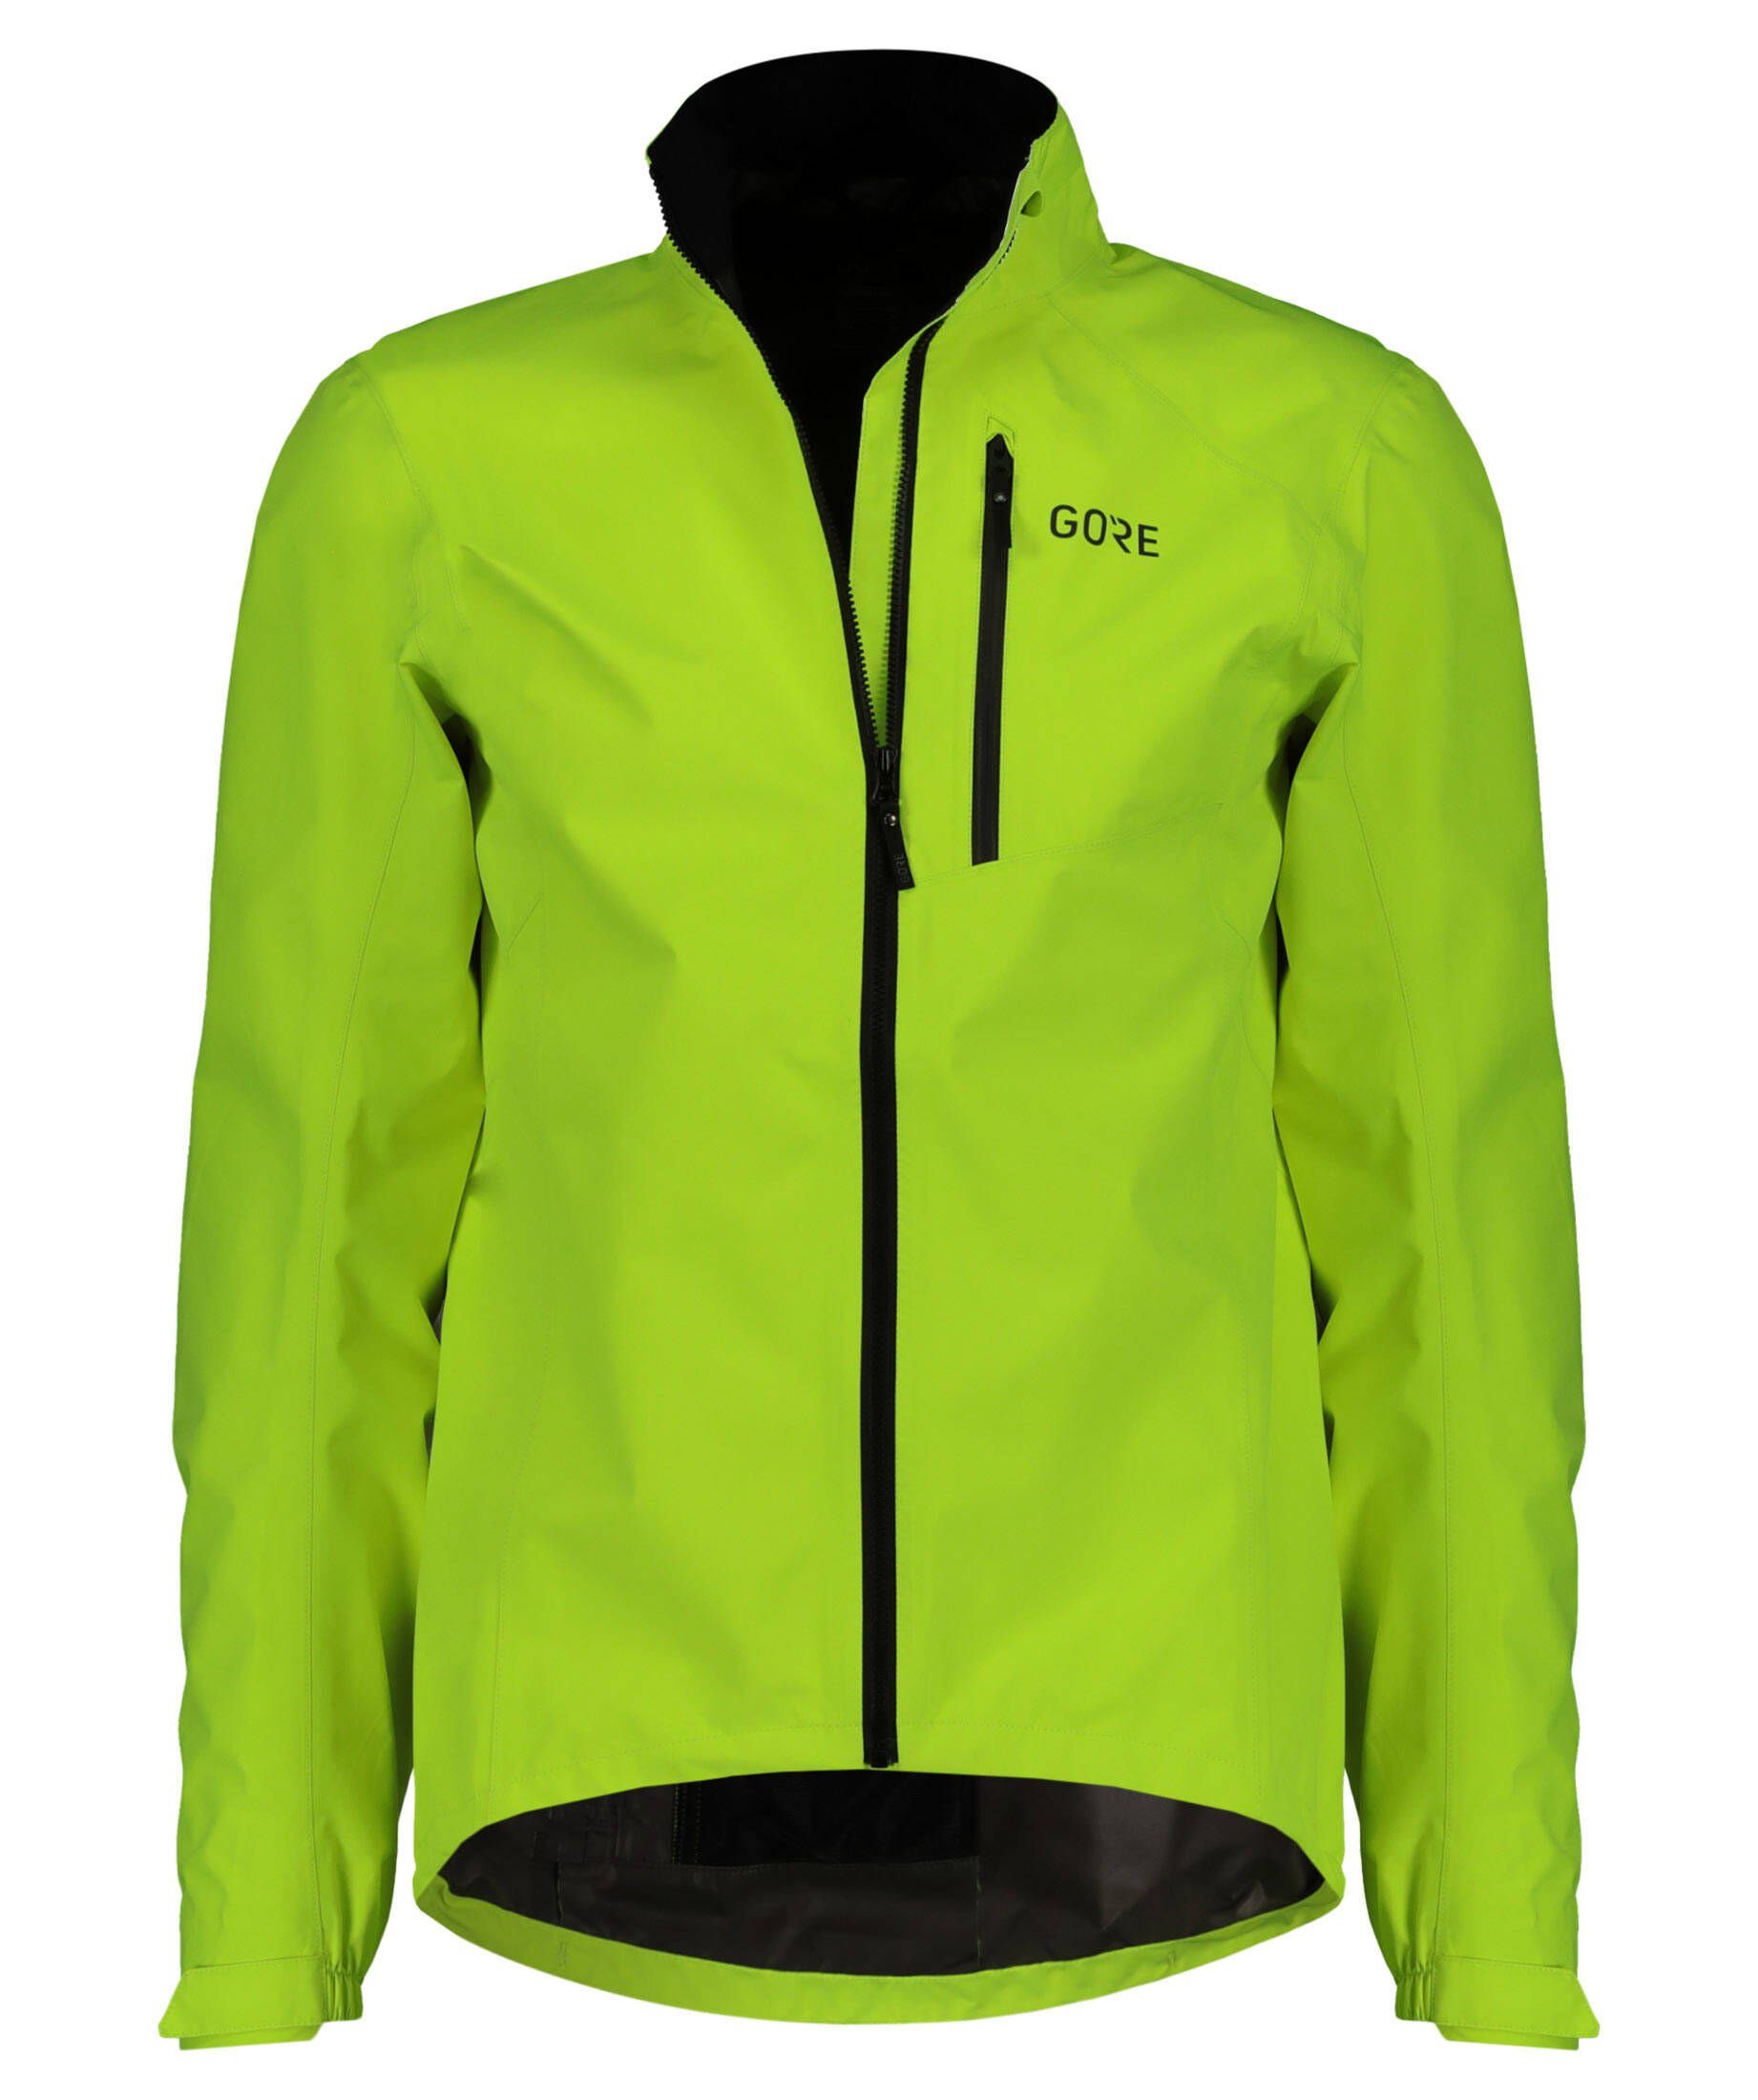 GORE® Wear Fahrradjacke Herren Radjacke "GTX Paclite Jacket" gelb (510)